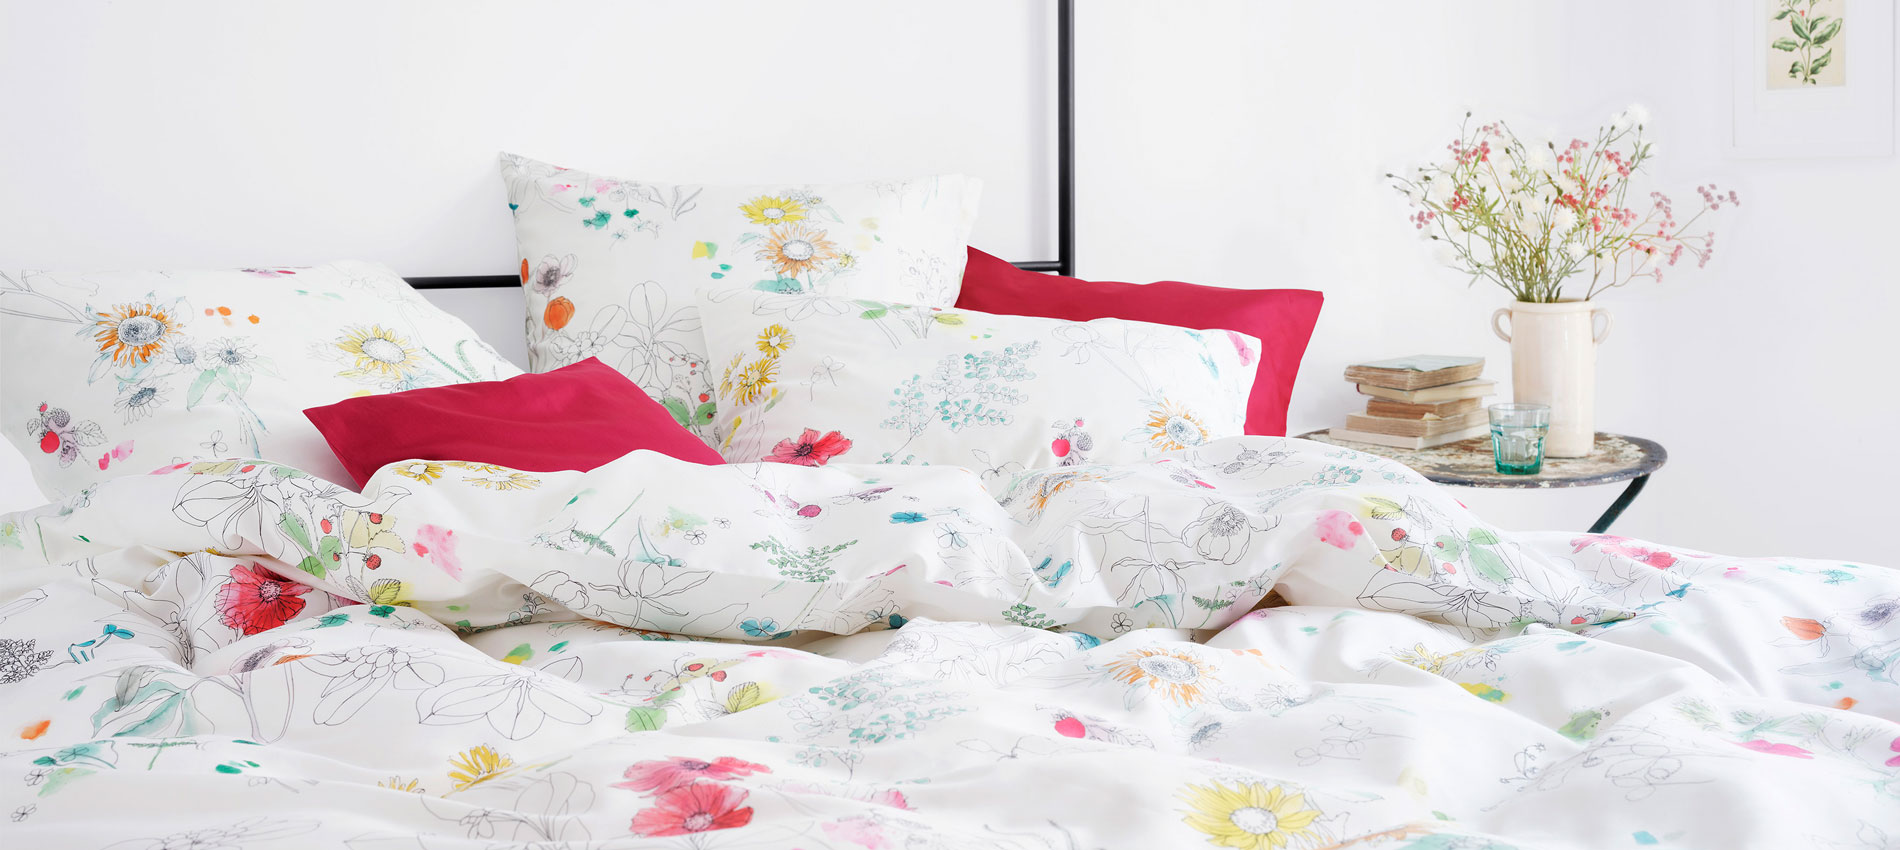 Marc Leopold Onlineshop for Bed Linen & Bedding